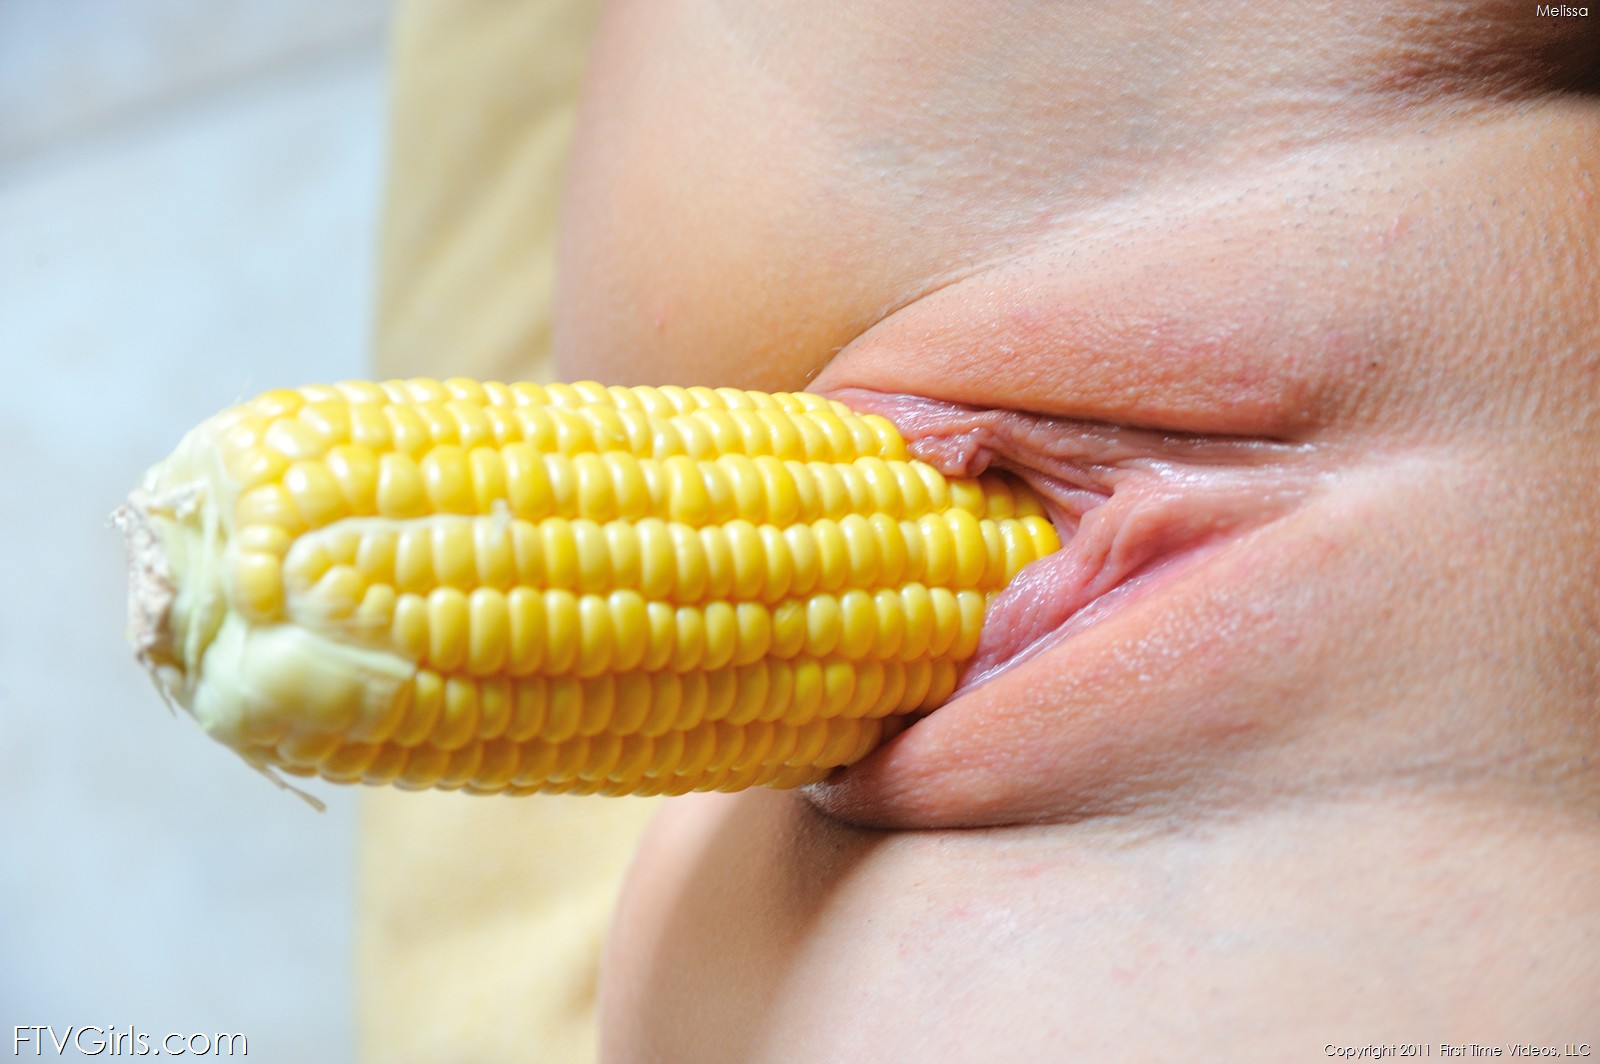 Corn Porn Video.